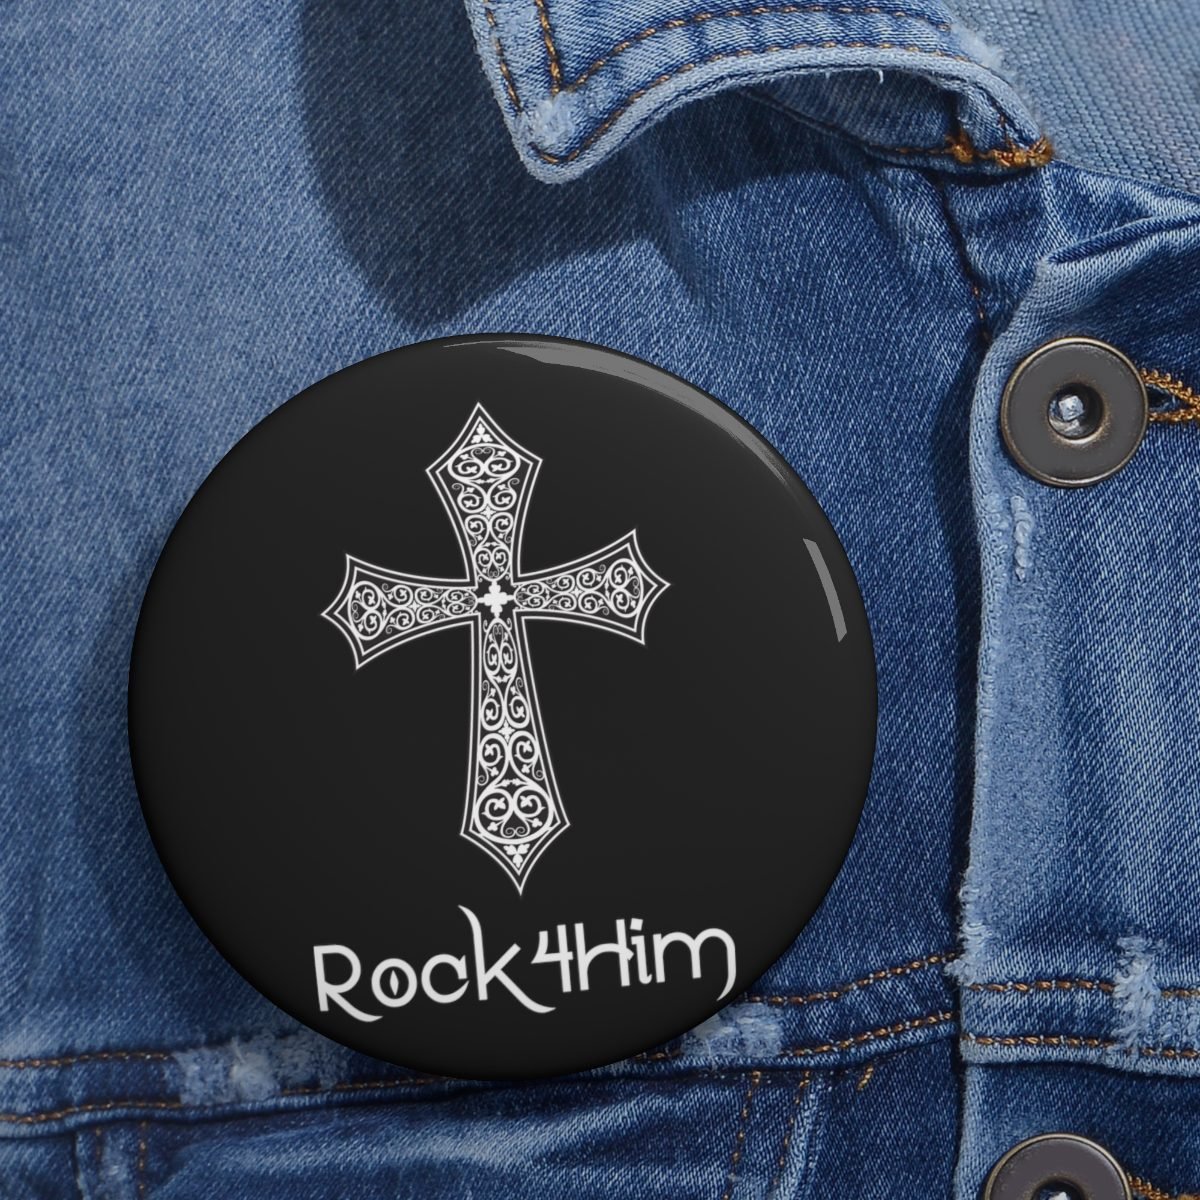 Rock4Him Pin Buttons